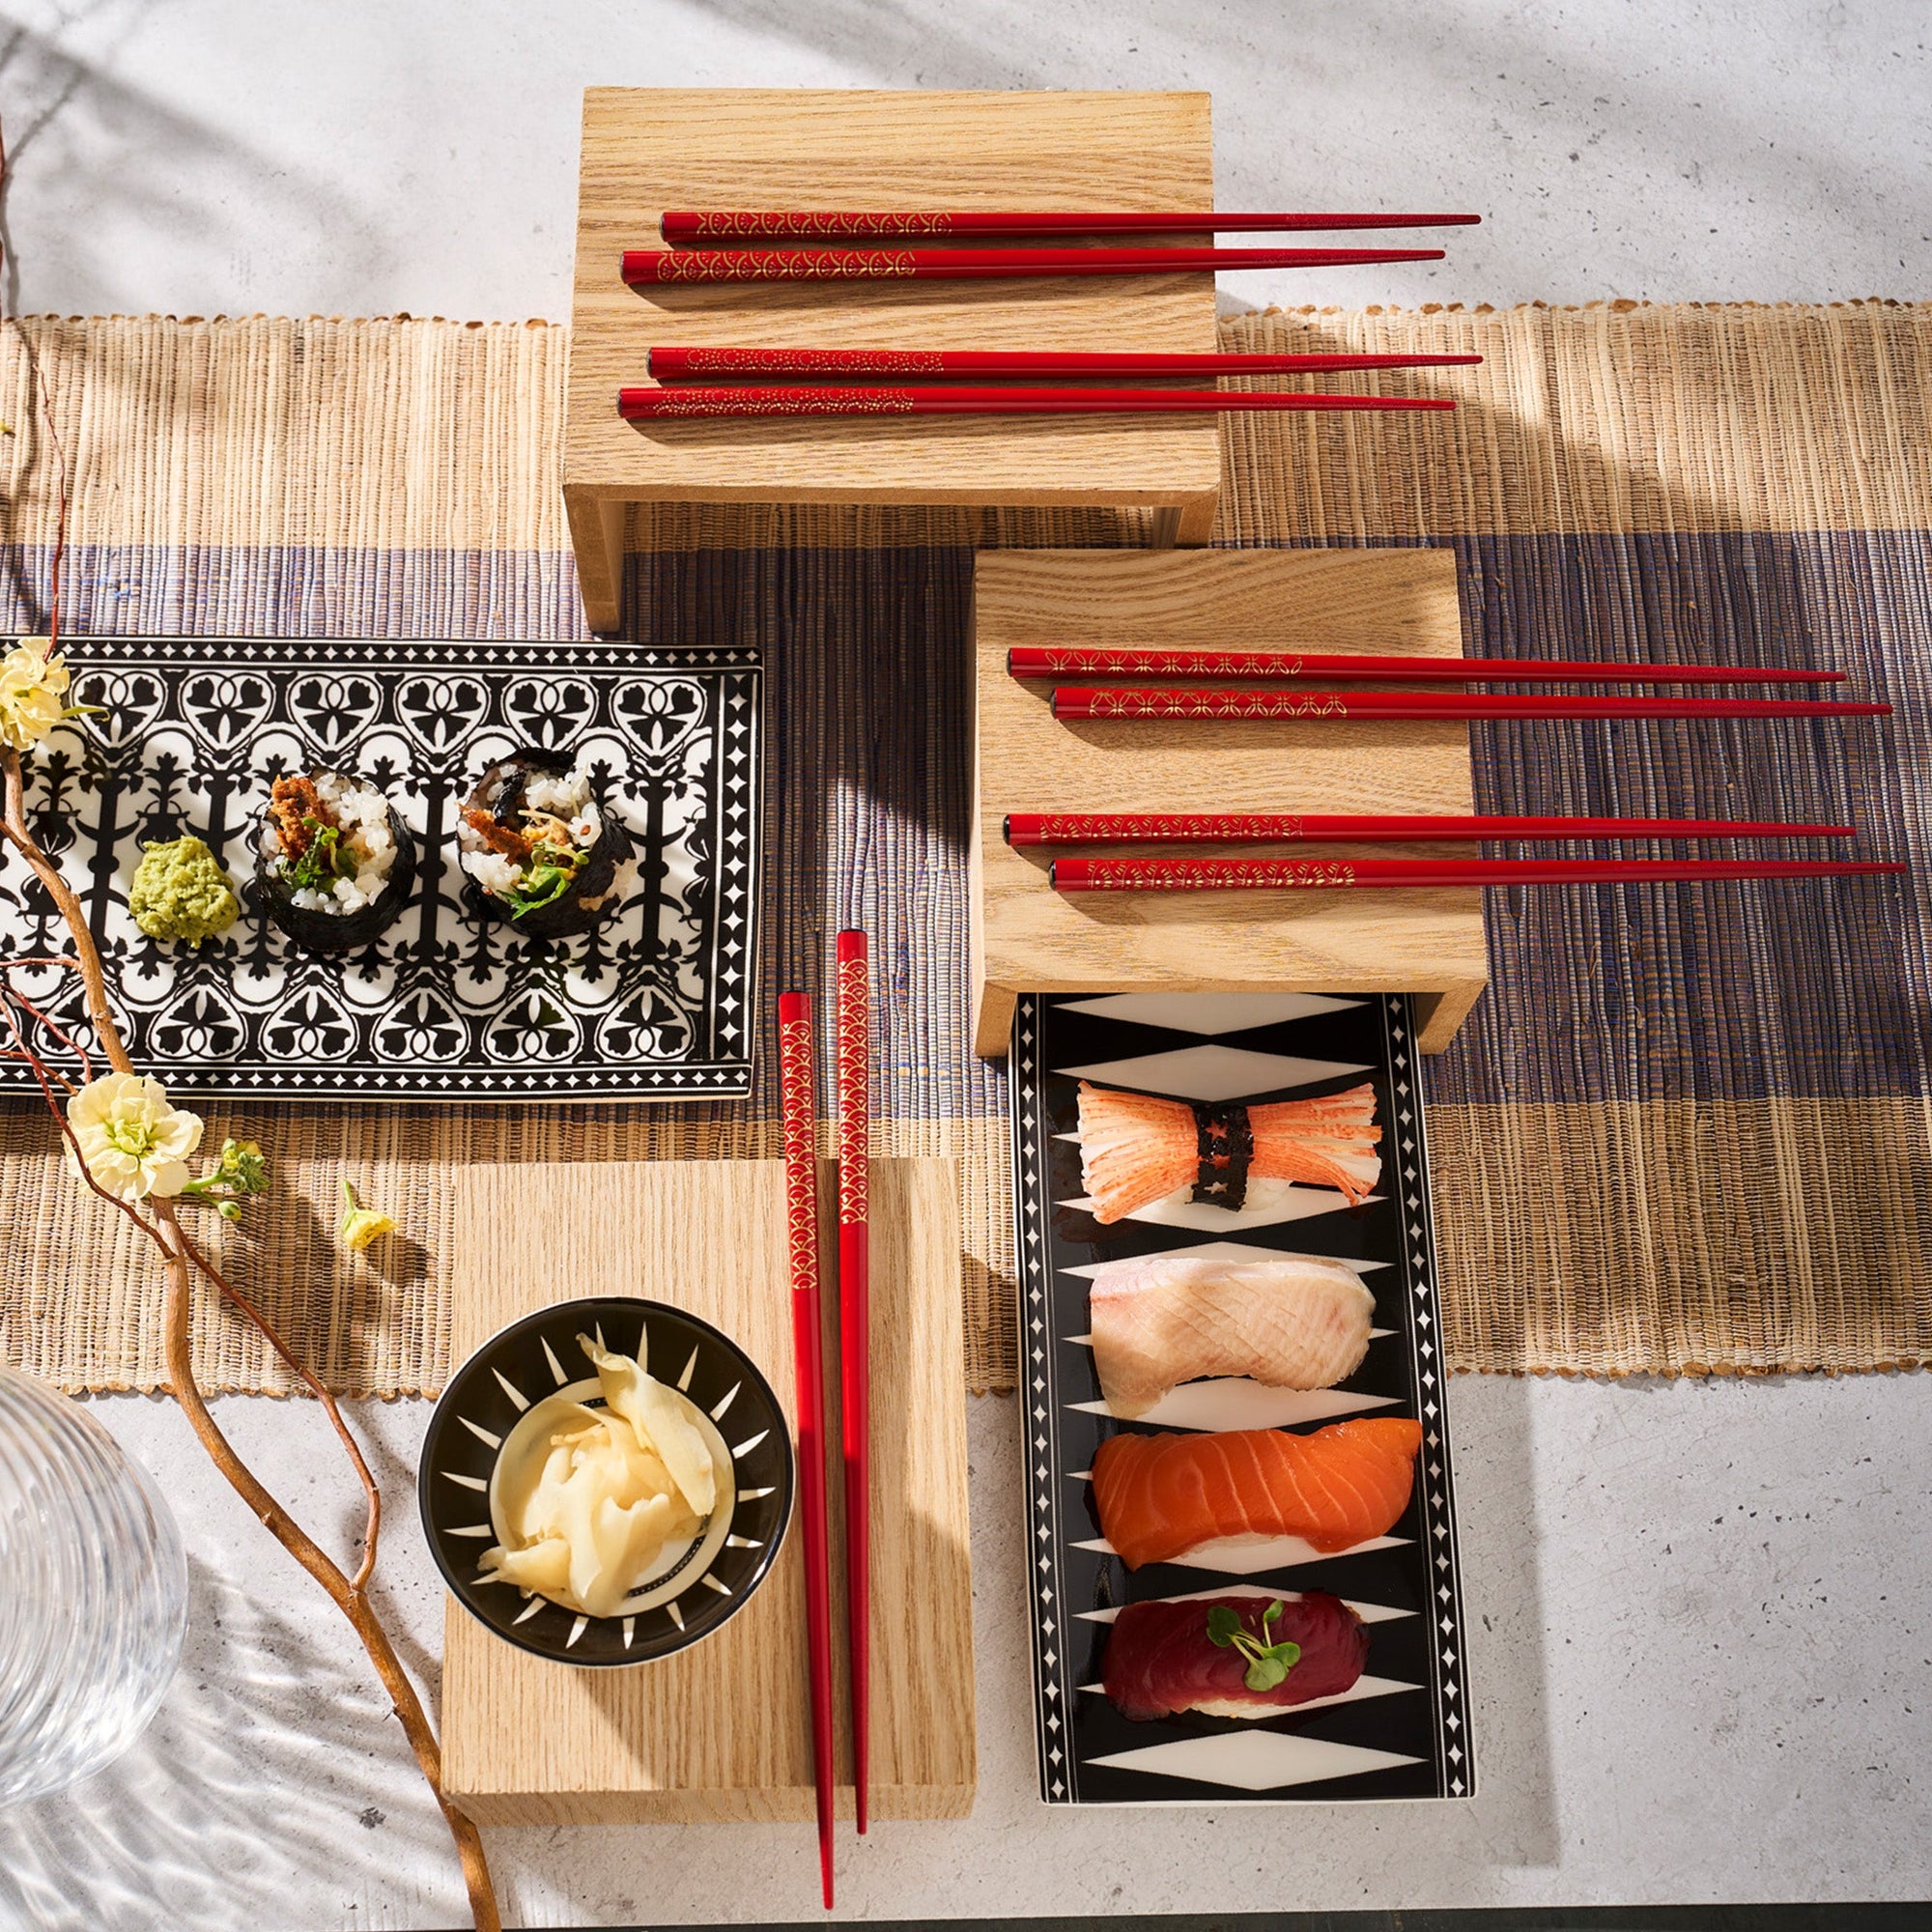 Tokyo Red and Gold Wood Chopsticks from Caskata.